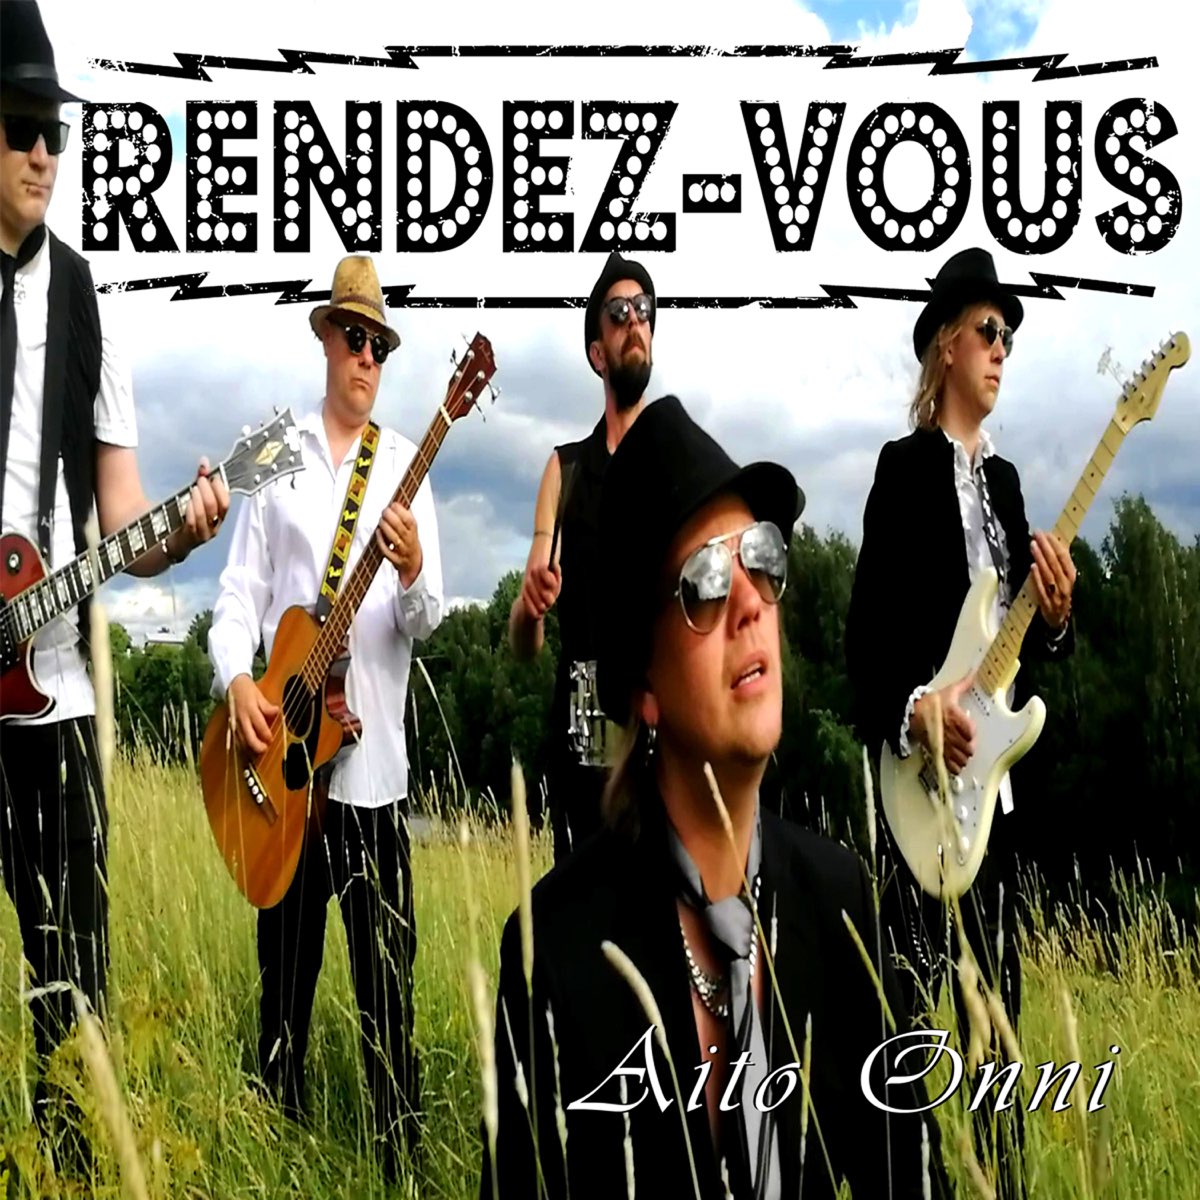 Aito onni - Single - Album by Rendez-Vous - Apple Music